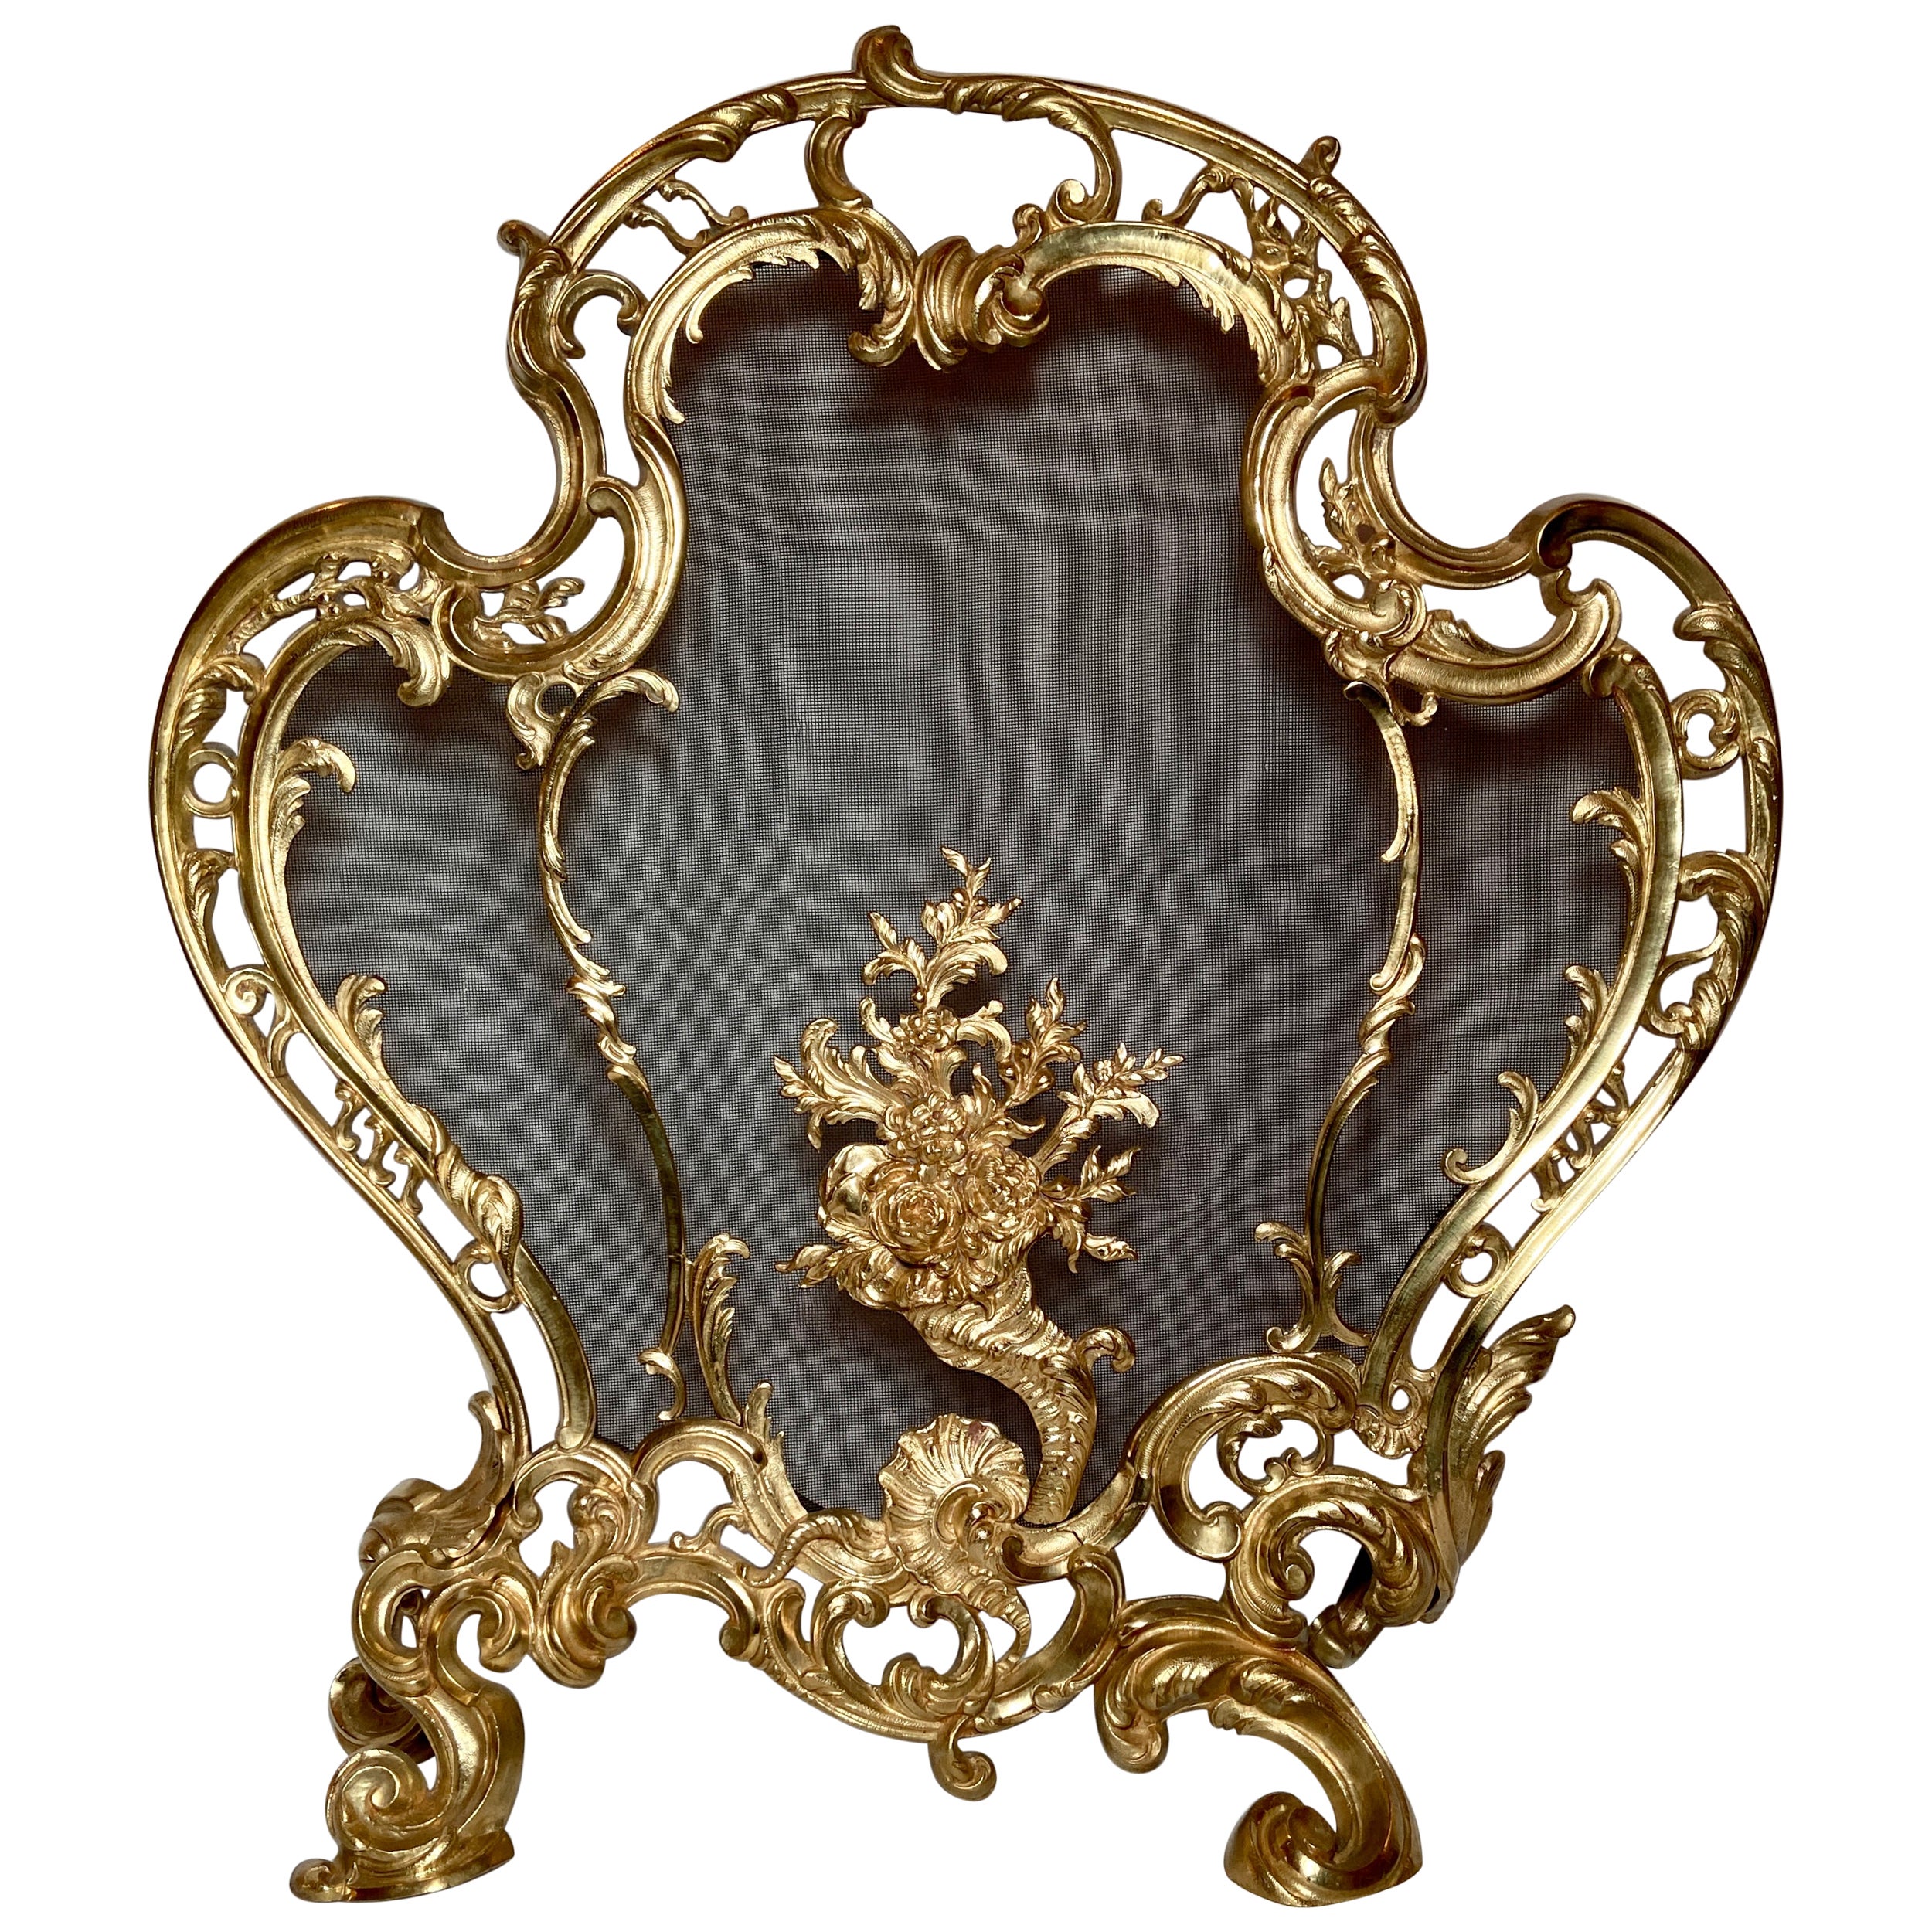 Antique French Louis XV Gold Bronze Fire Screen, Circa 1865-1875